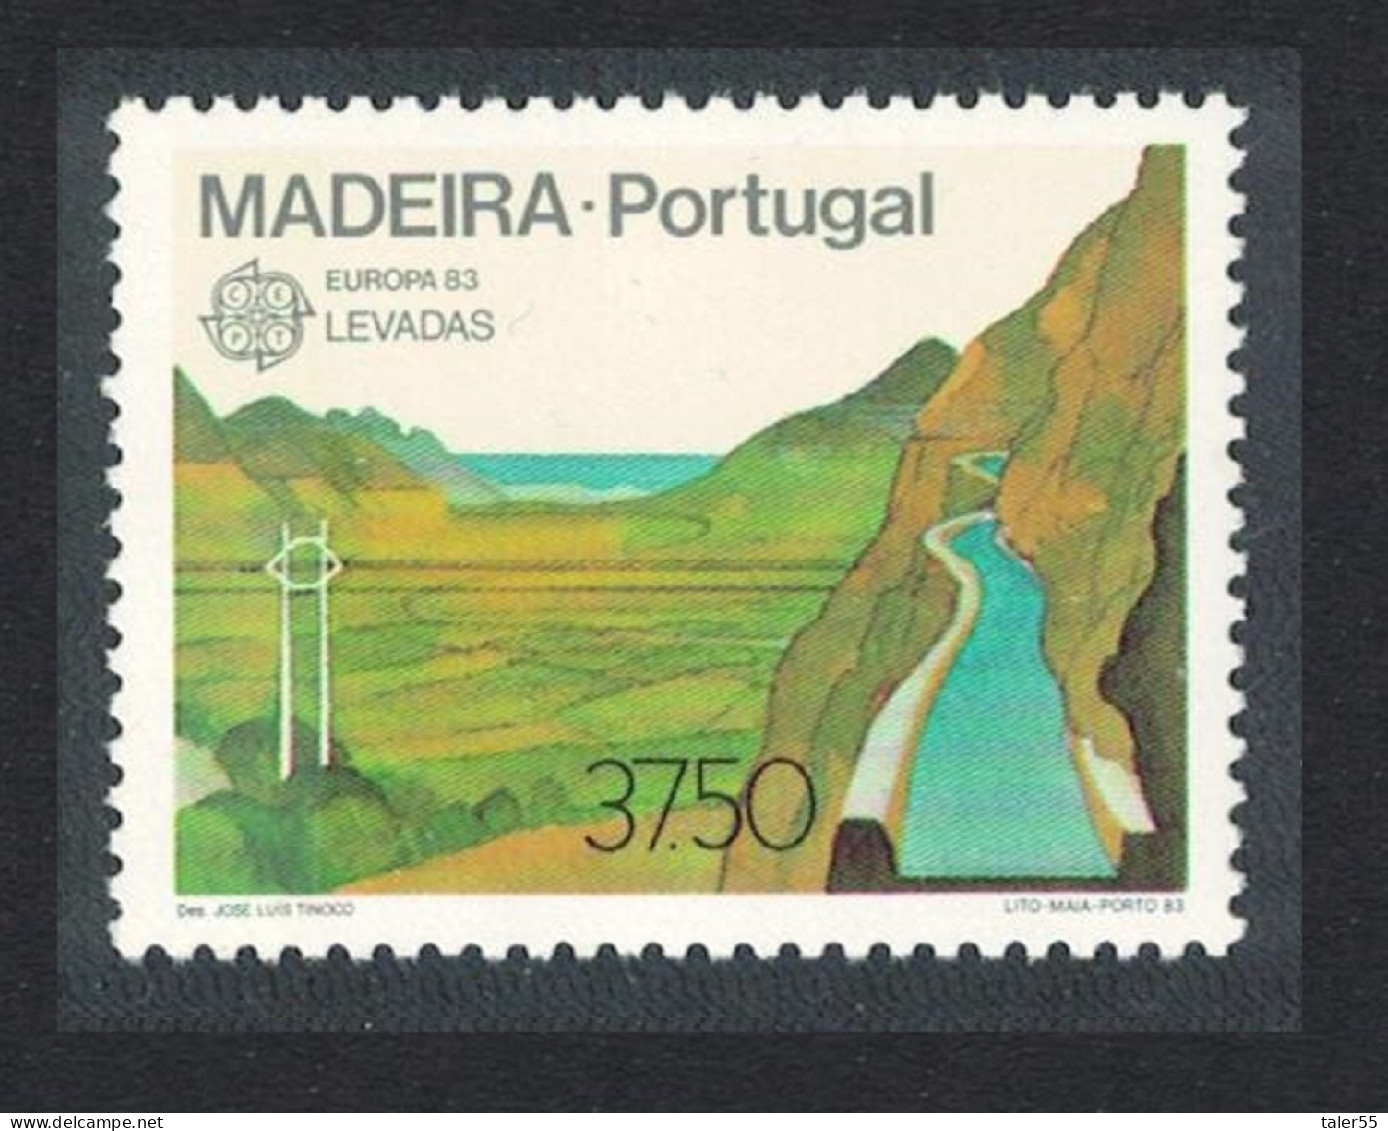 Madeira Los Levandas Irrigation Channels Europa CEPT 1983 MNH SG#203 - Madeira